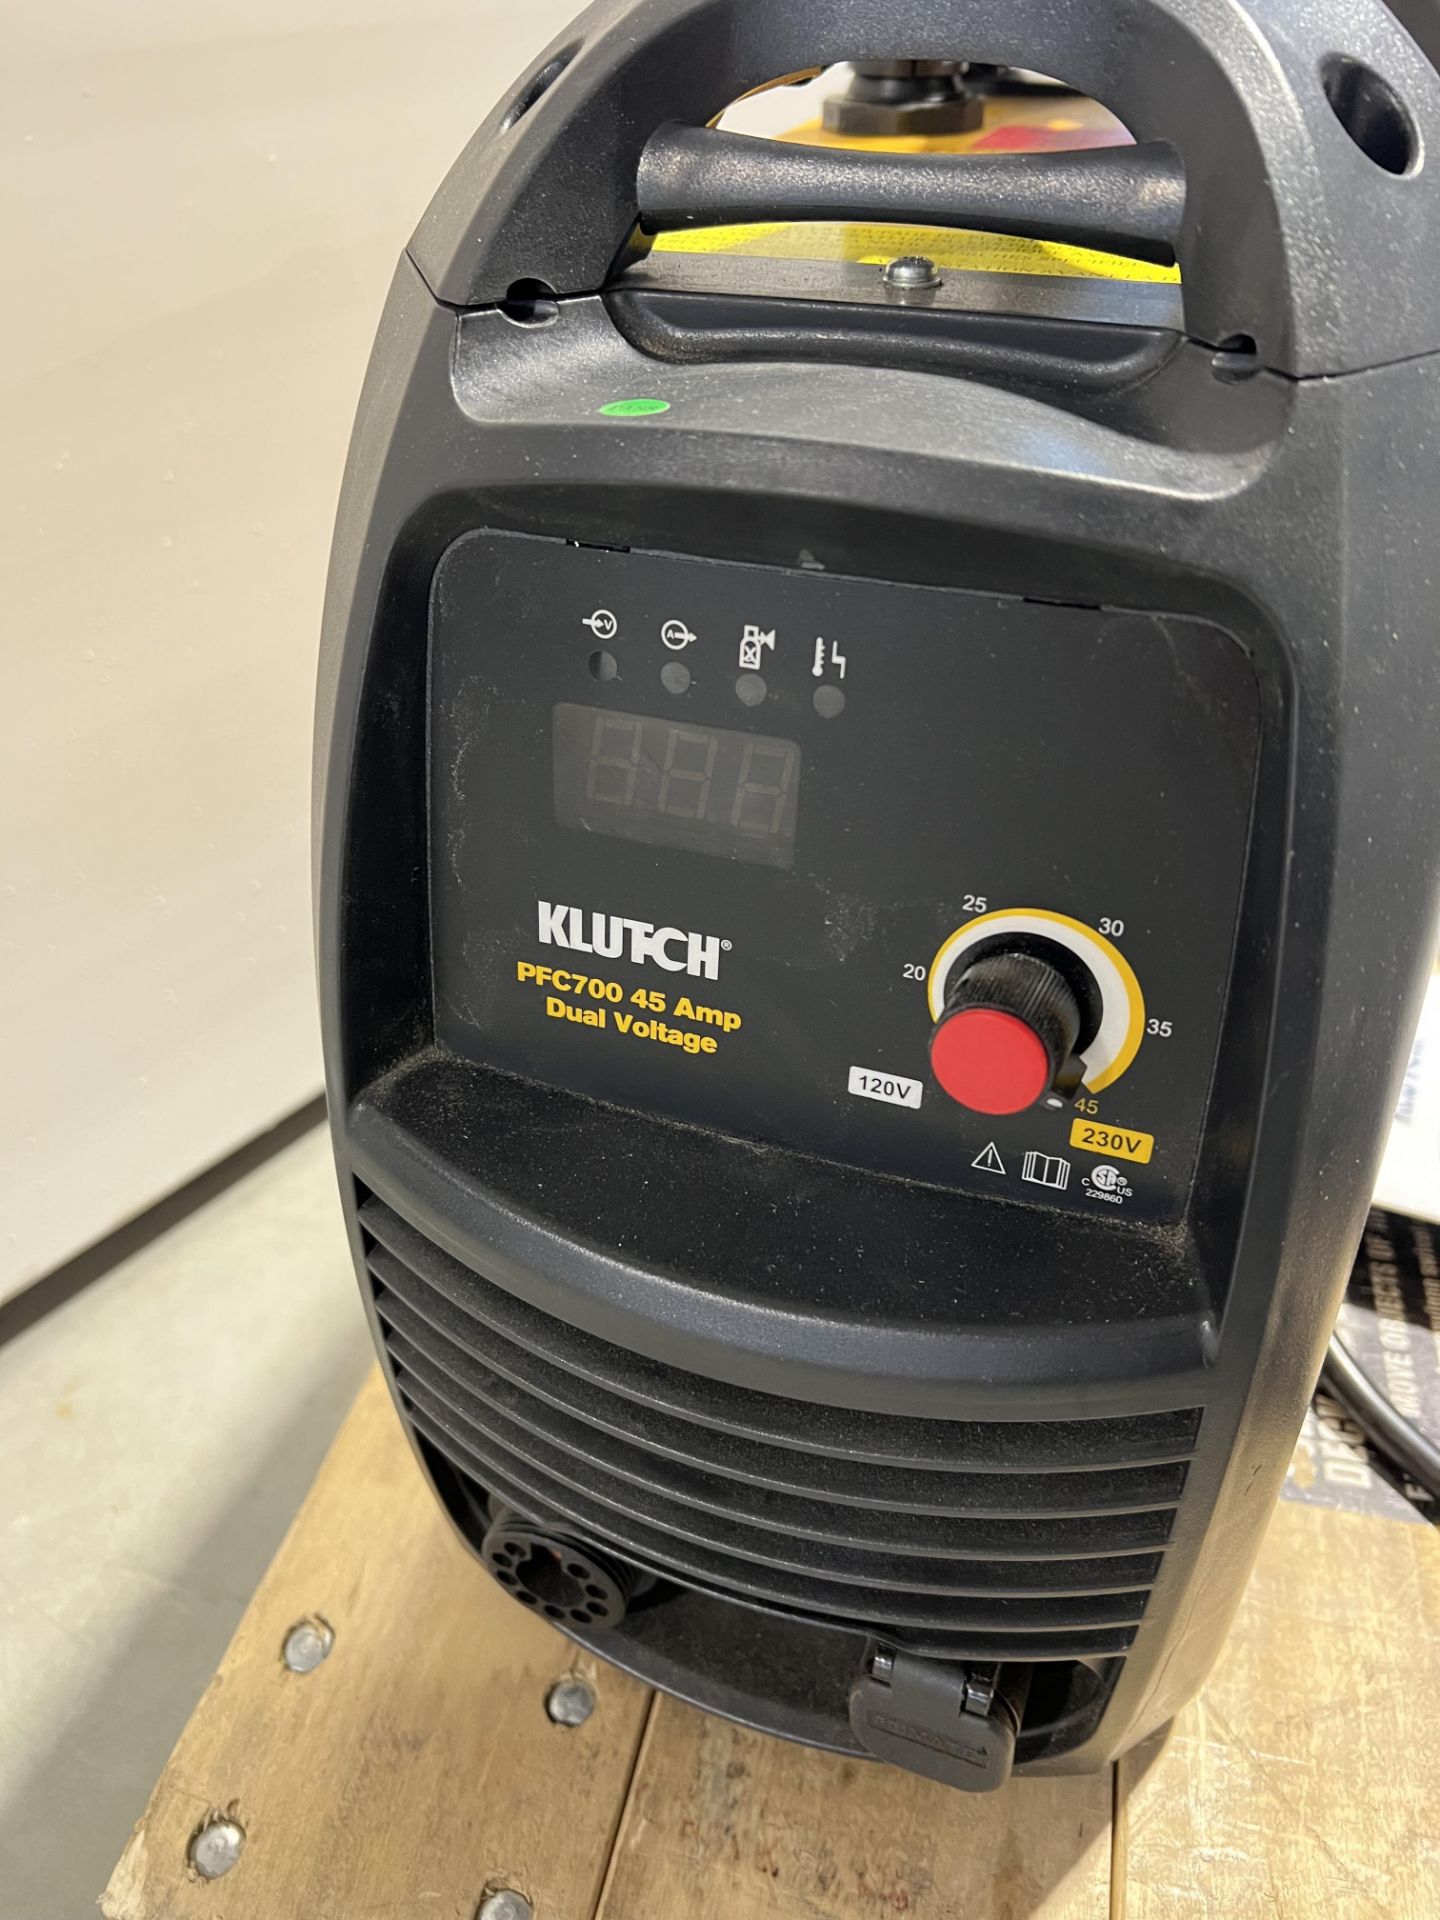 Klutch Plasma Cutter - Image 2 of 3